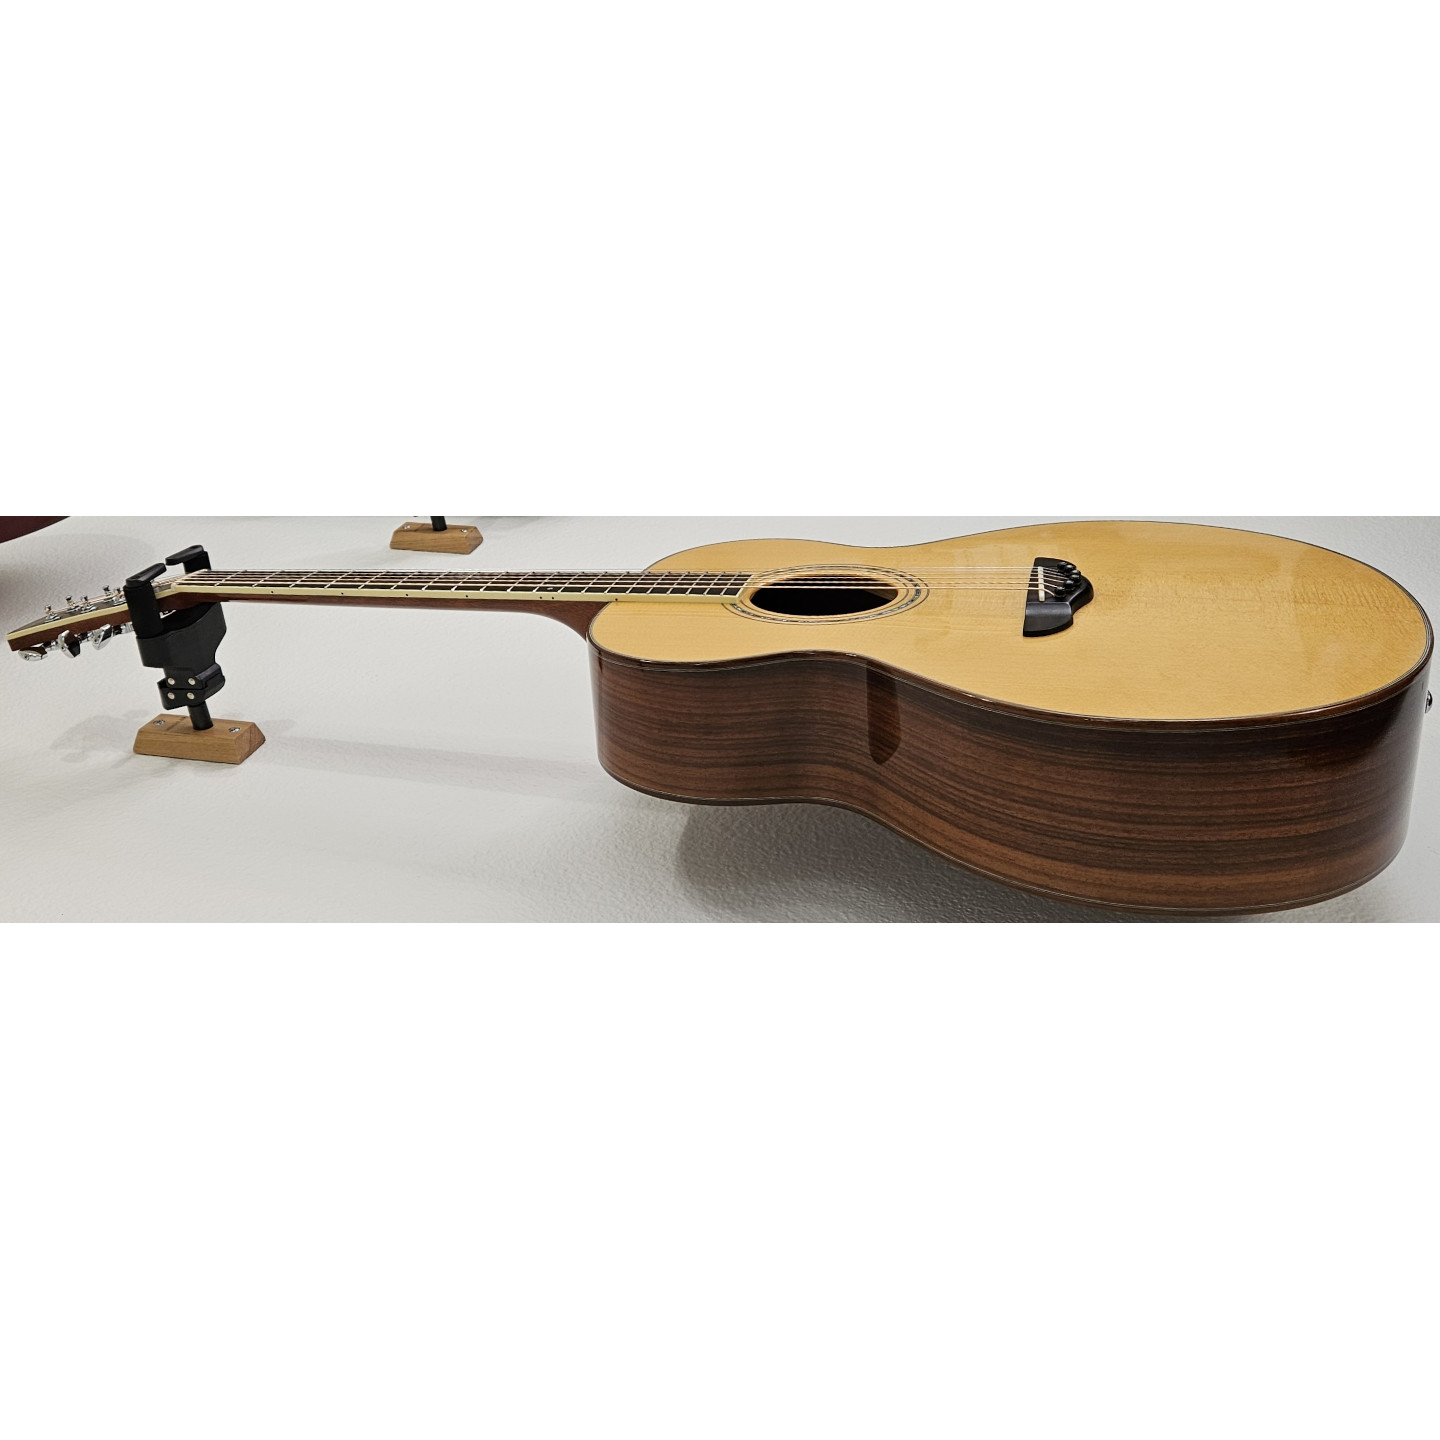 2007 Northwood R80-MJ Mini-Jumbo Acoustic Guitar